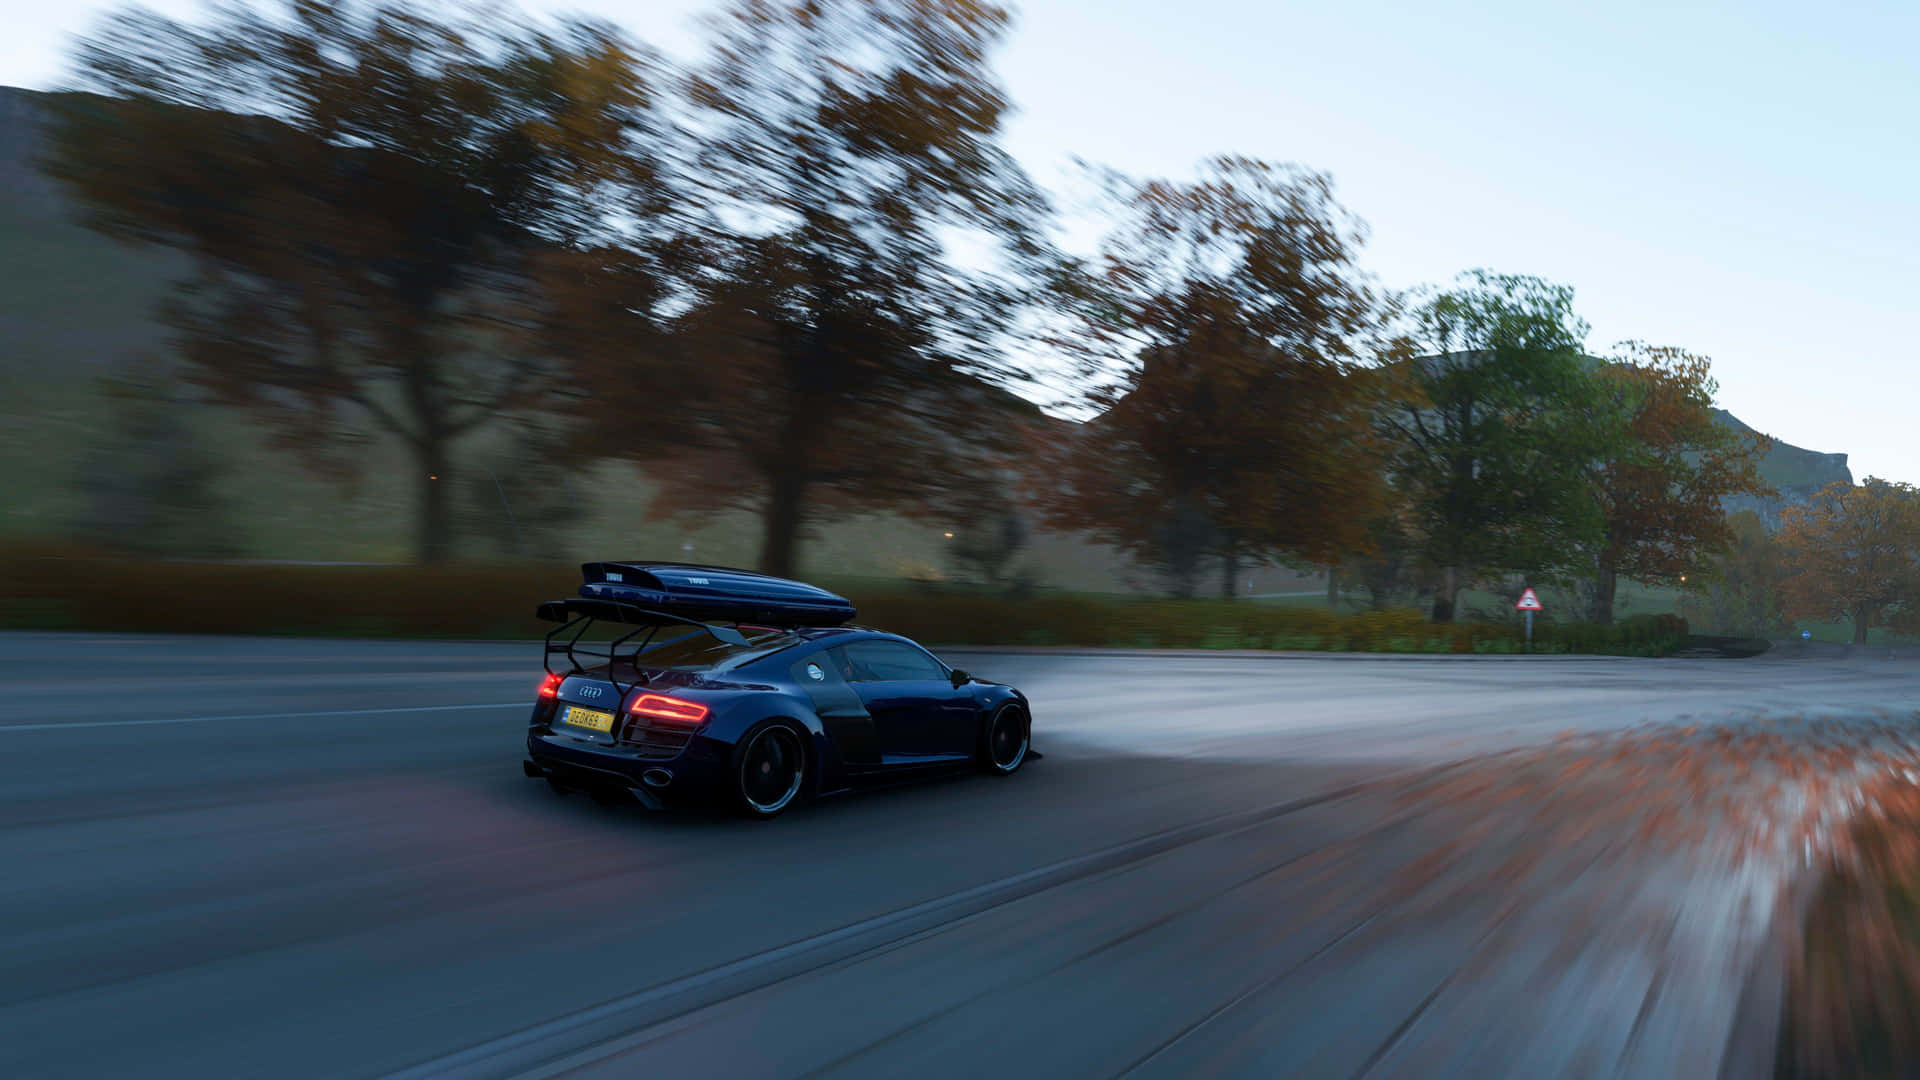 4k Forza Horizon 4 Background Black Car On The Road Wallpaper